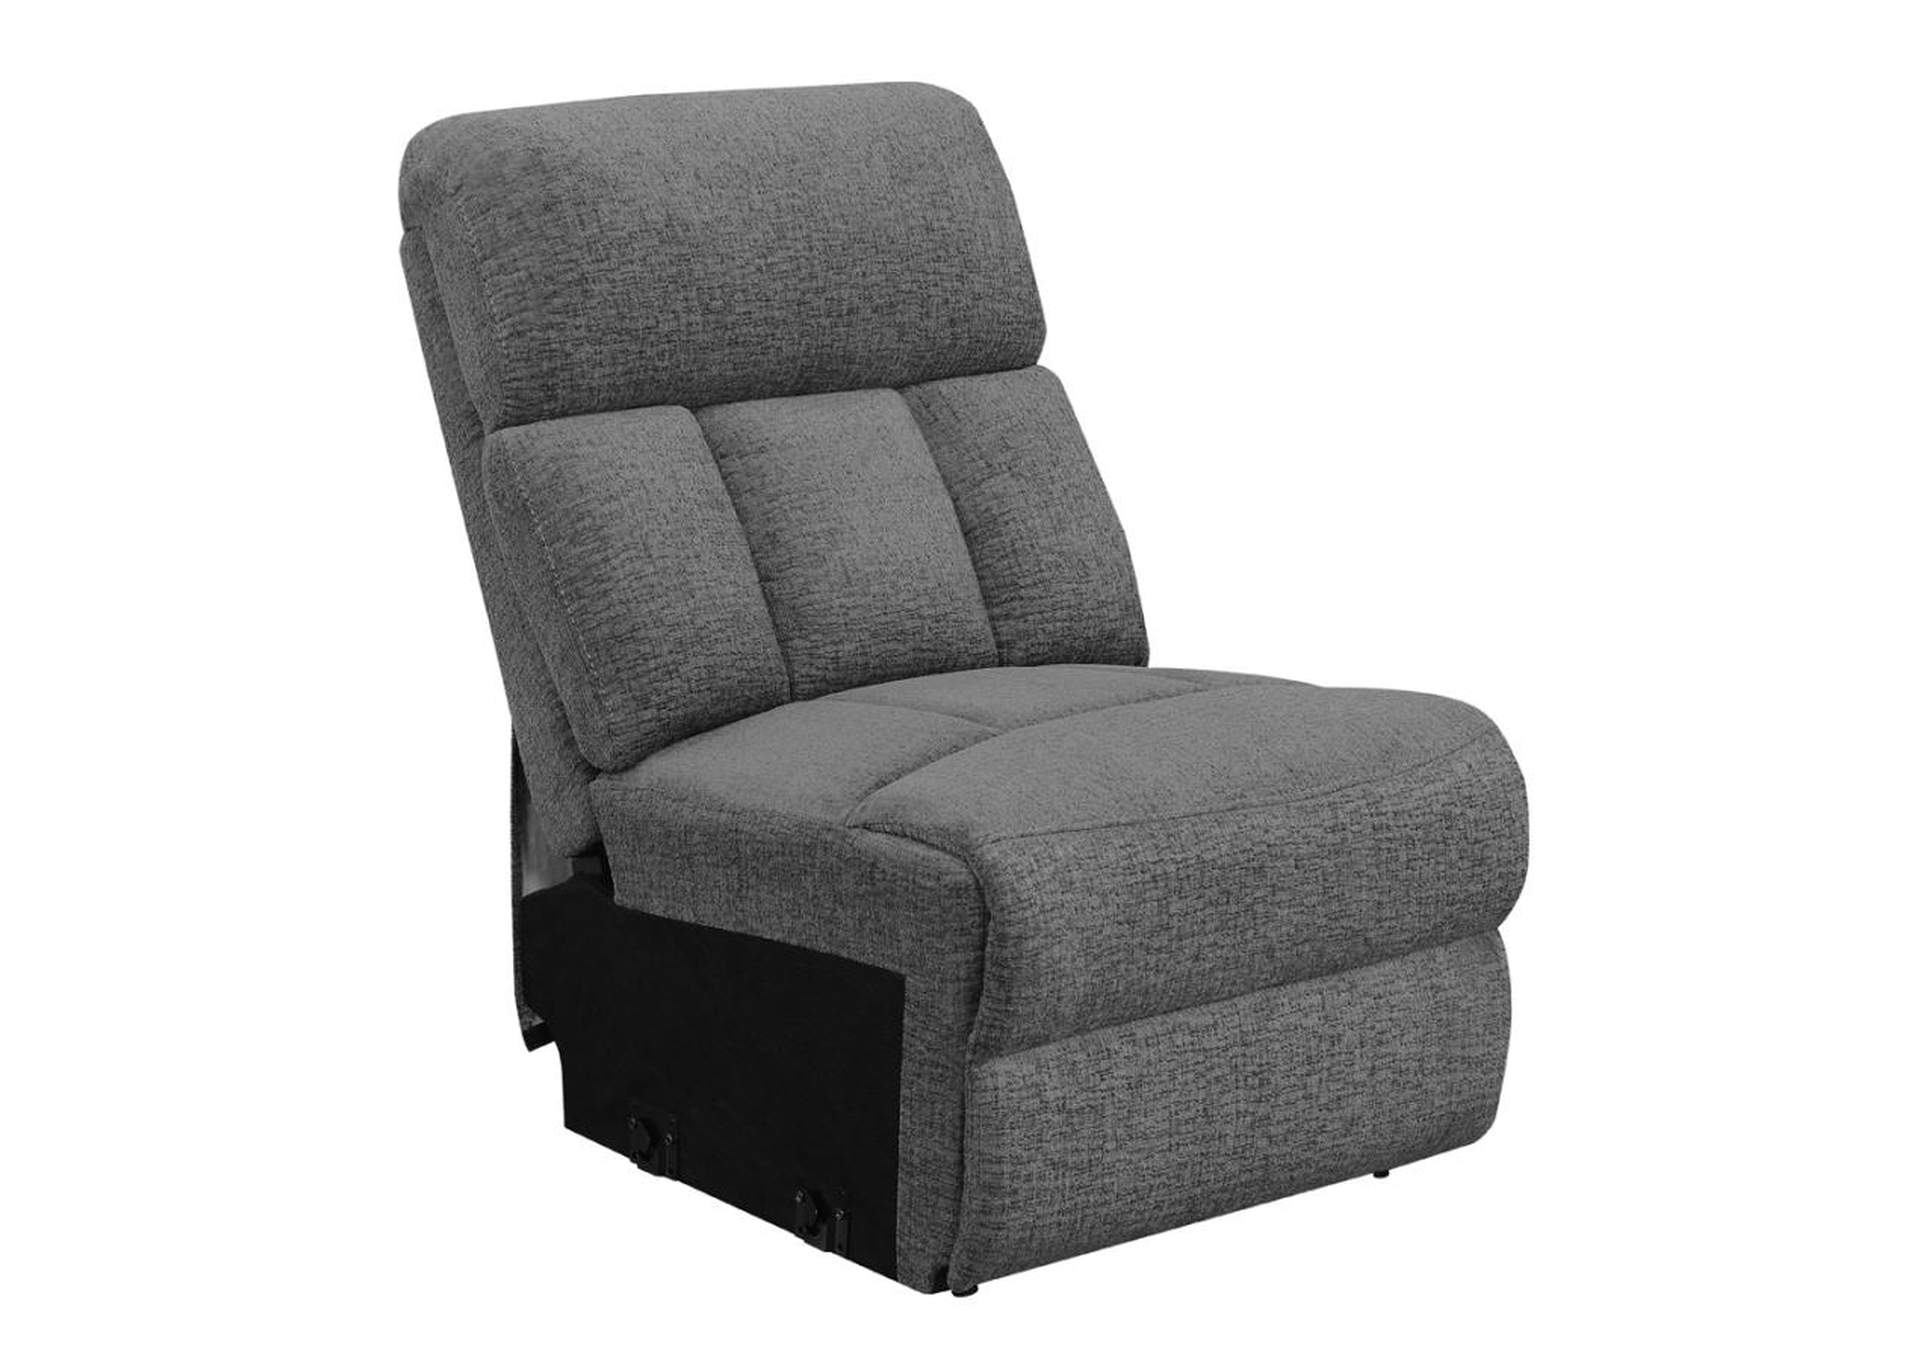 Armless Chair,Coaster Furniture